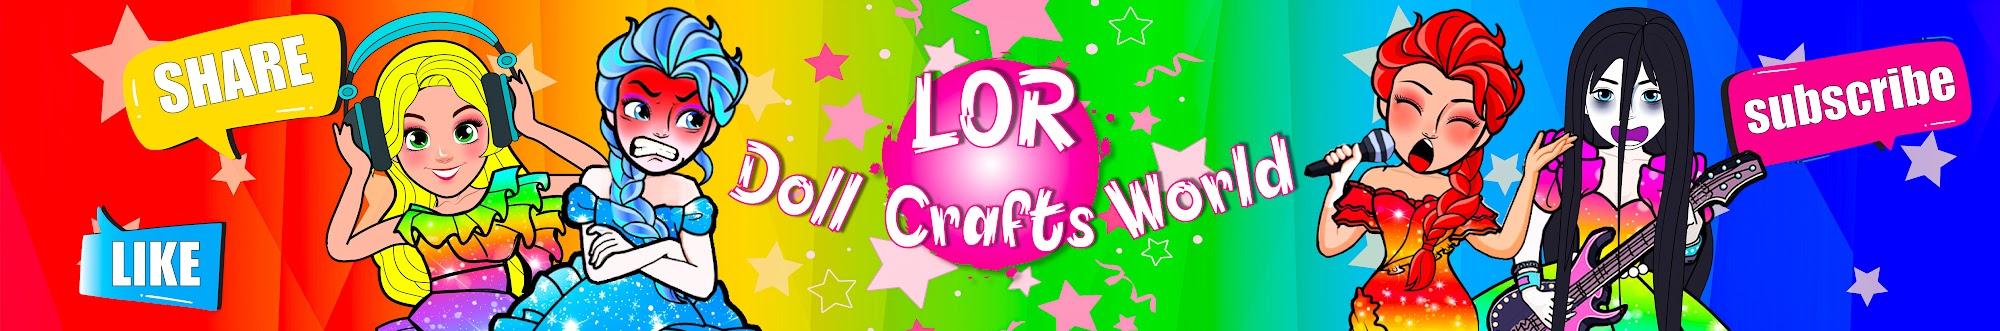 LOR Doll Crafts World